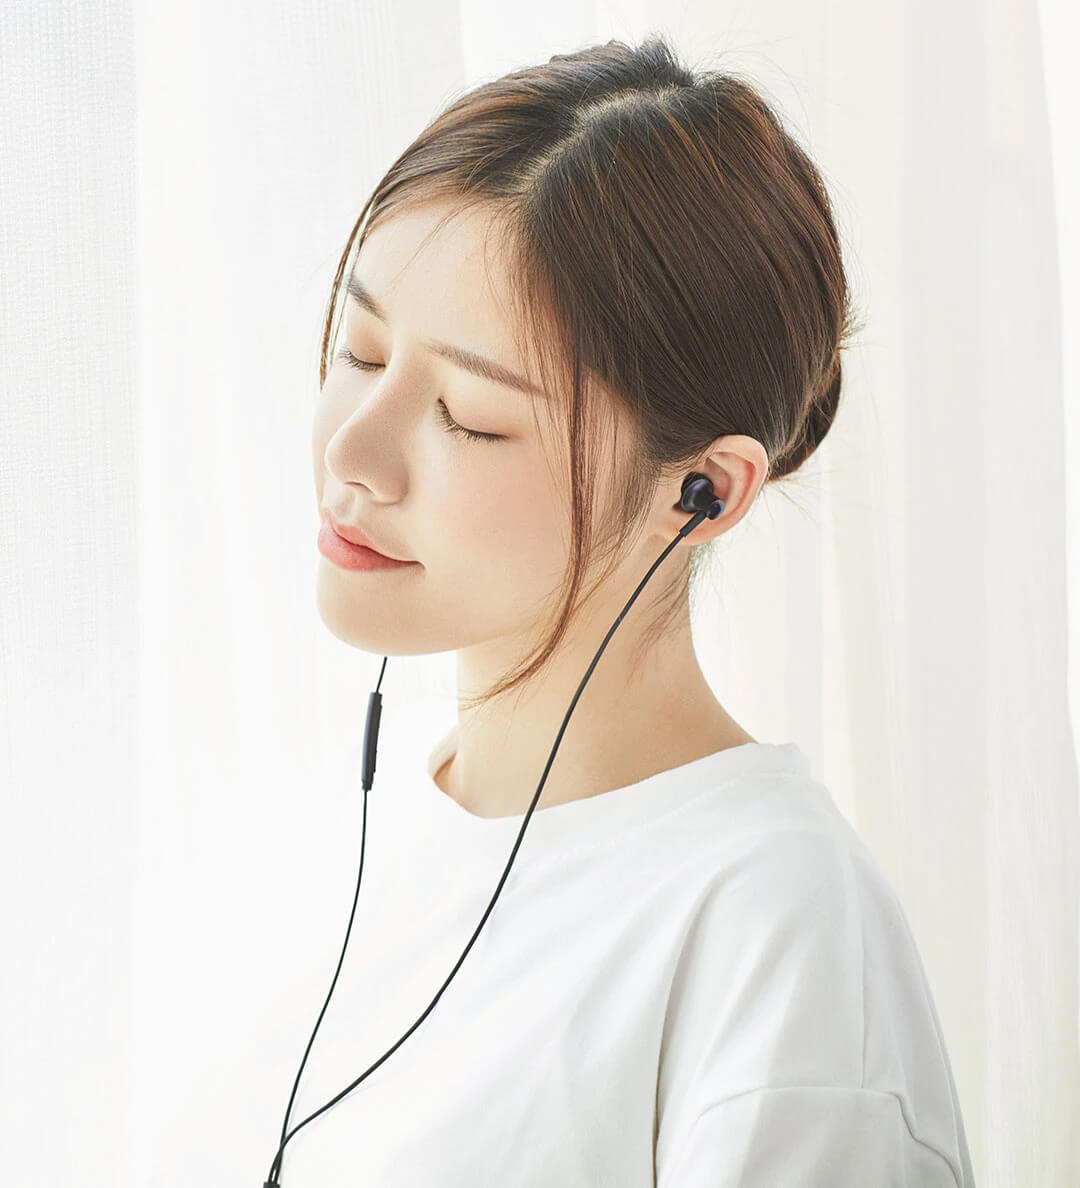 Mi In-Ear Hybrid Iron Headphones 2